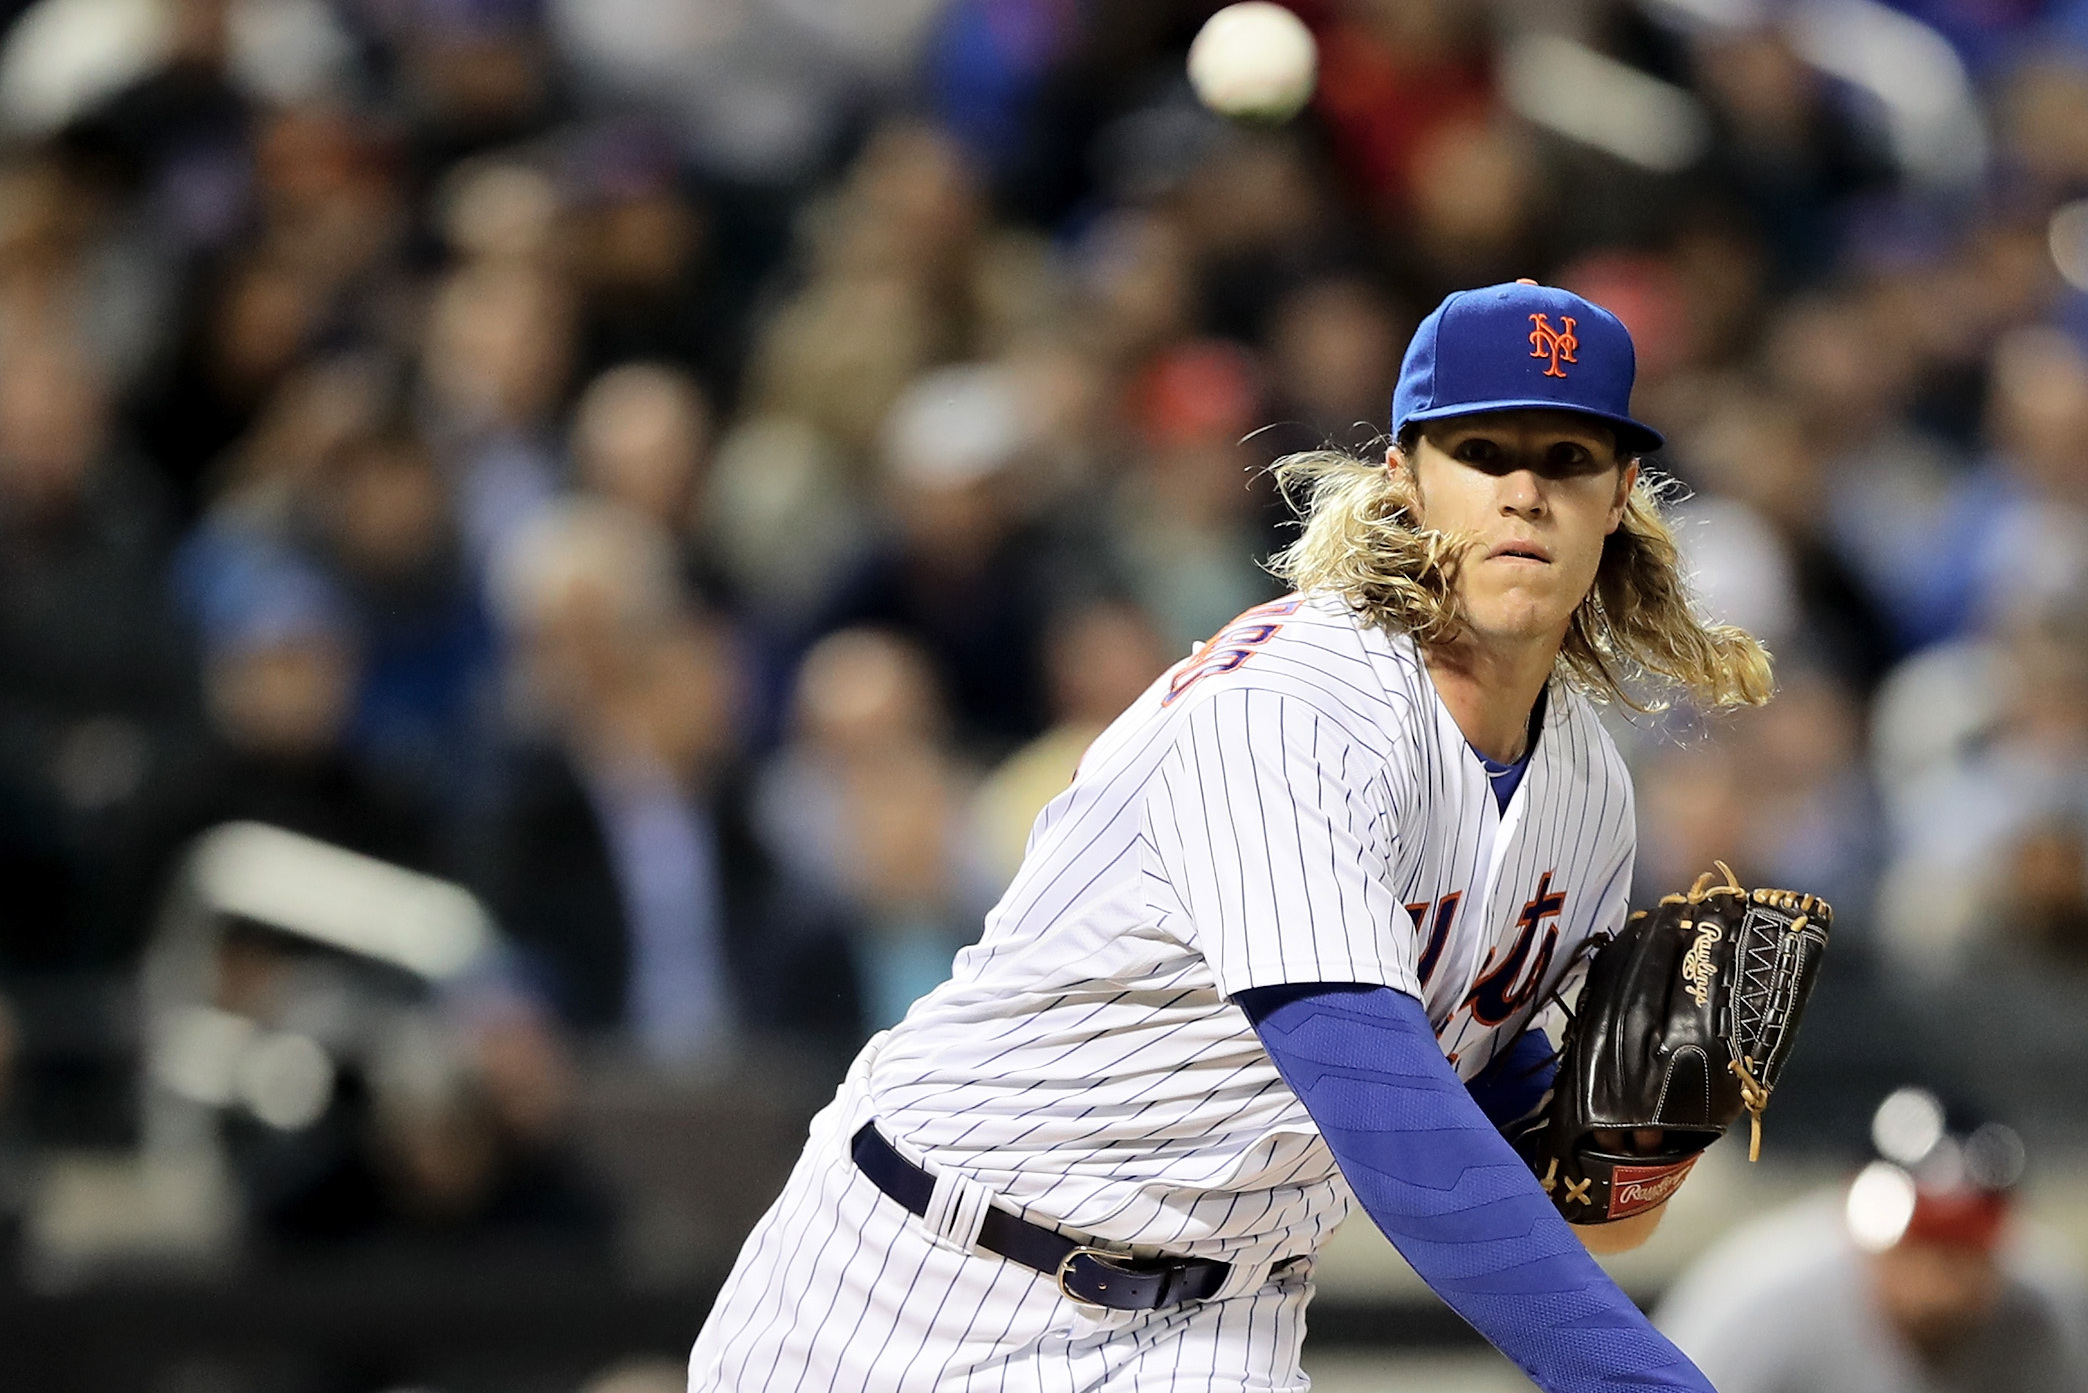 New York Mets Jersey - Noah Syndergaard #34 - 2015 World Series patch